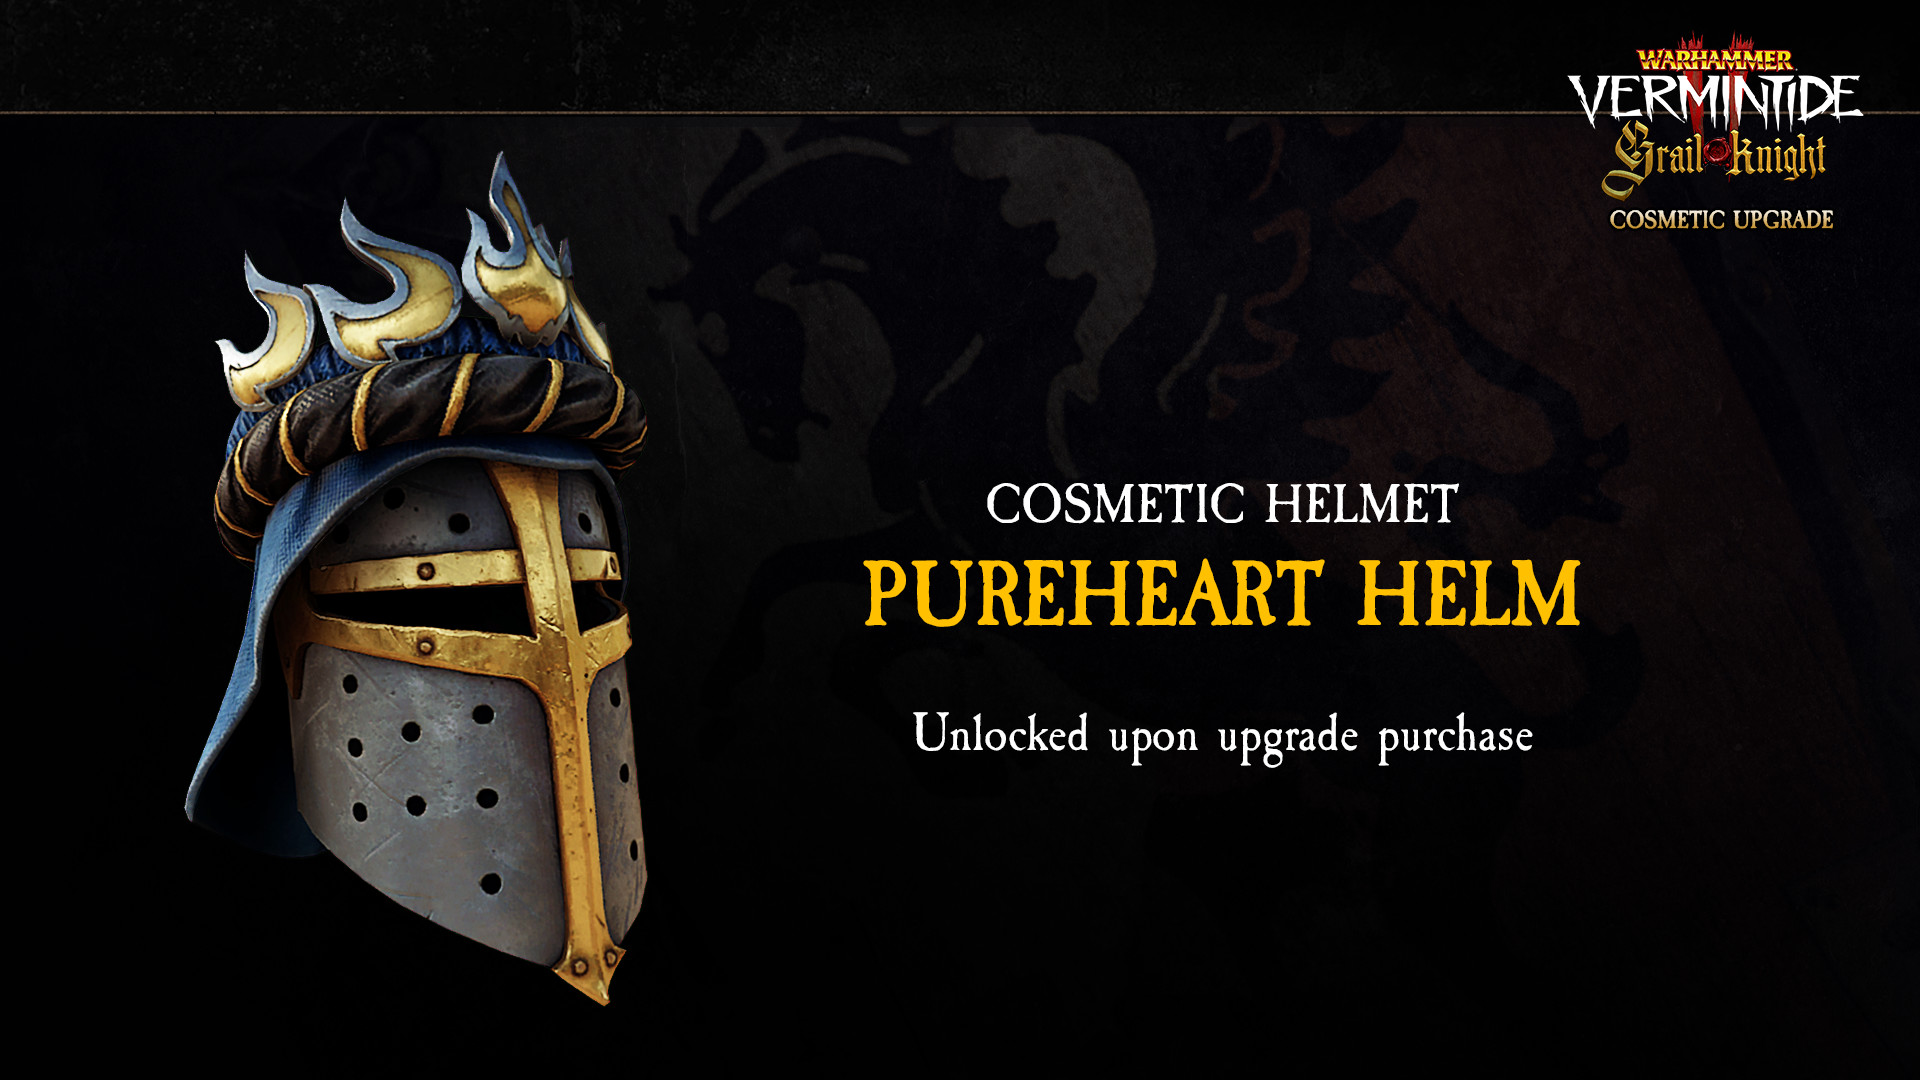 [$ 5.57] Warhammer: Vermintide 2 - Grail Knight Cosmetic Upgrade DLC Steam CD Key